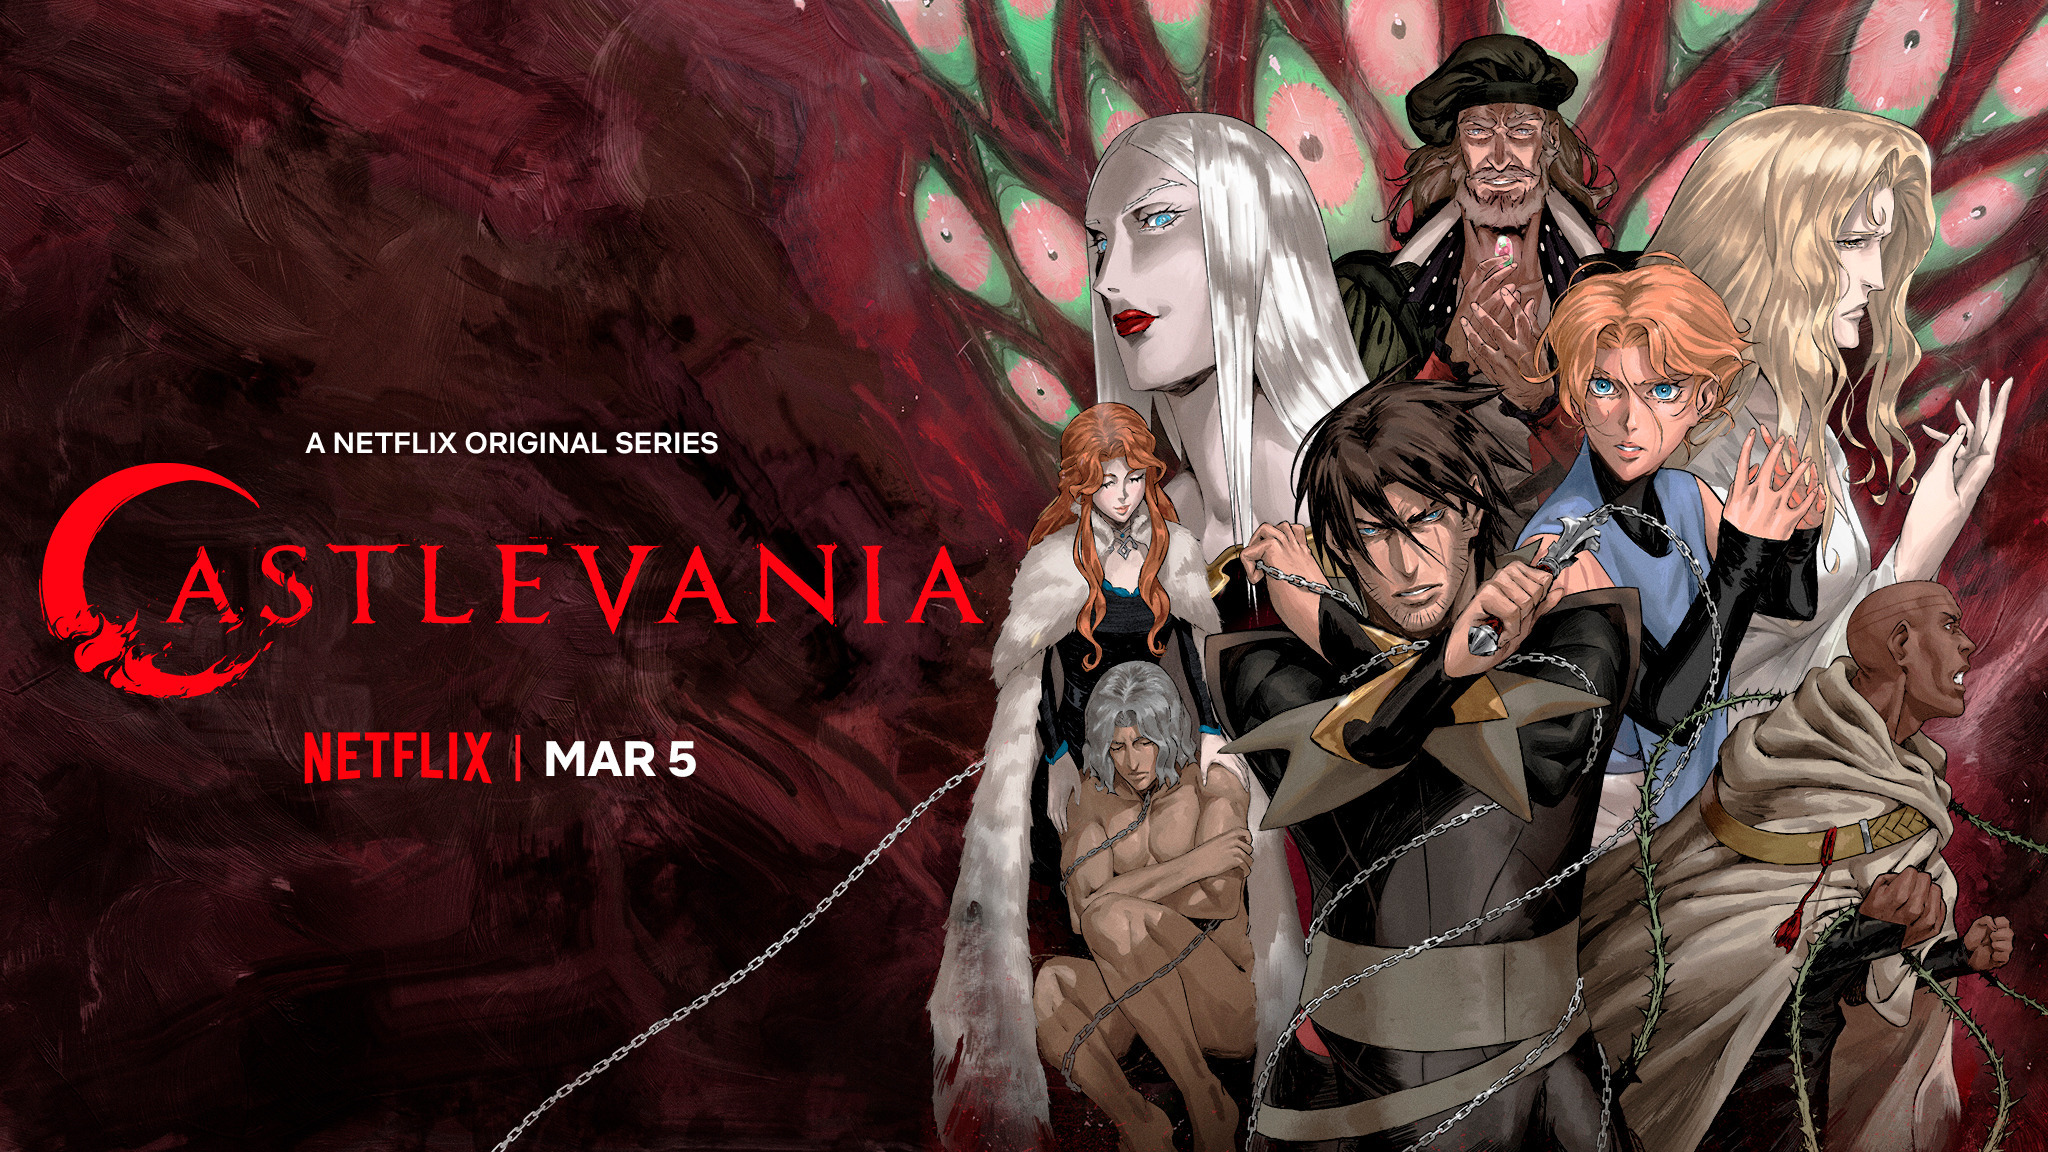 Mega Sized TV Poster Image for Castlevania (#5 of 5)